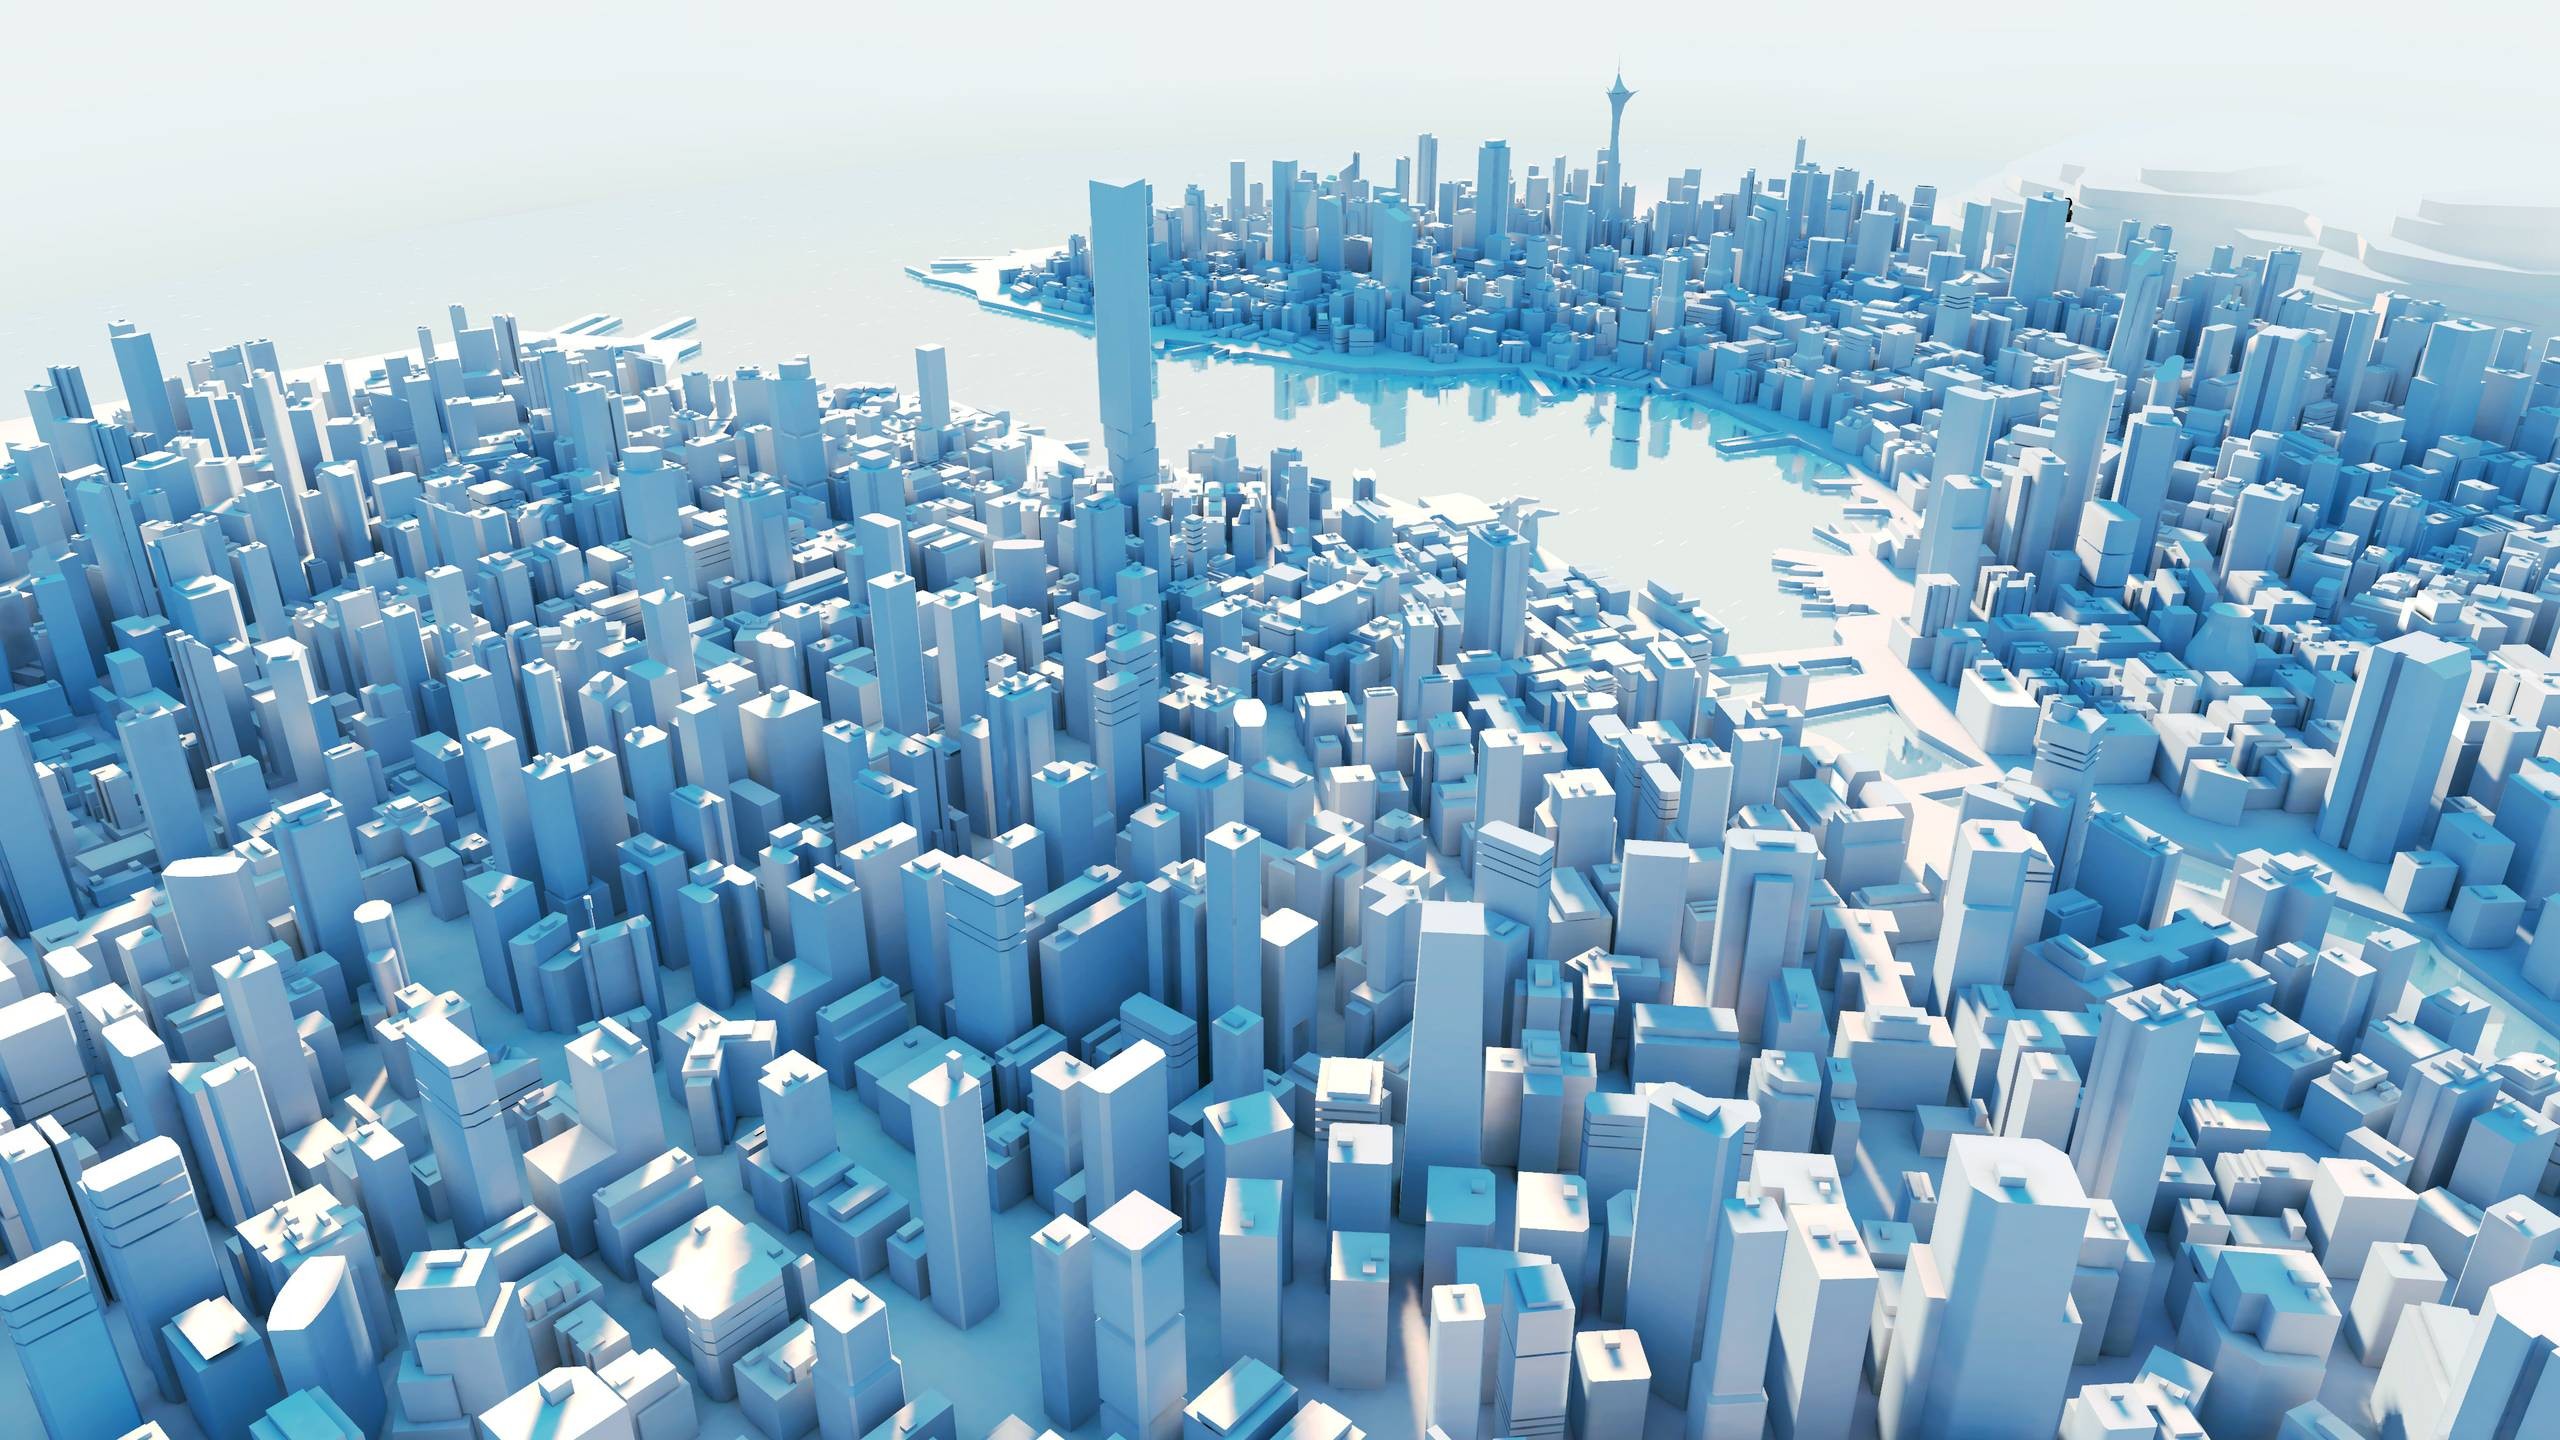 General 2560x1440 Mirror's Edge CGI cityscape building video games screen shot PC gaming